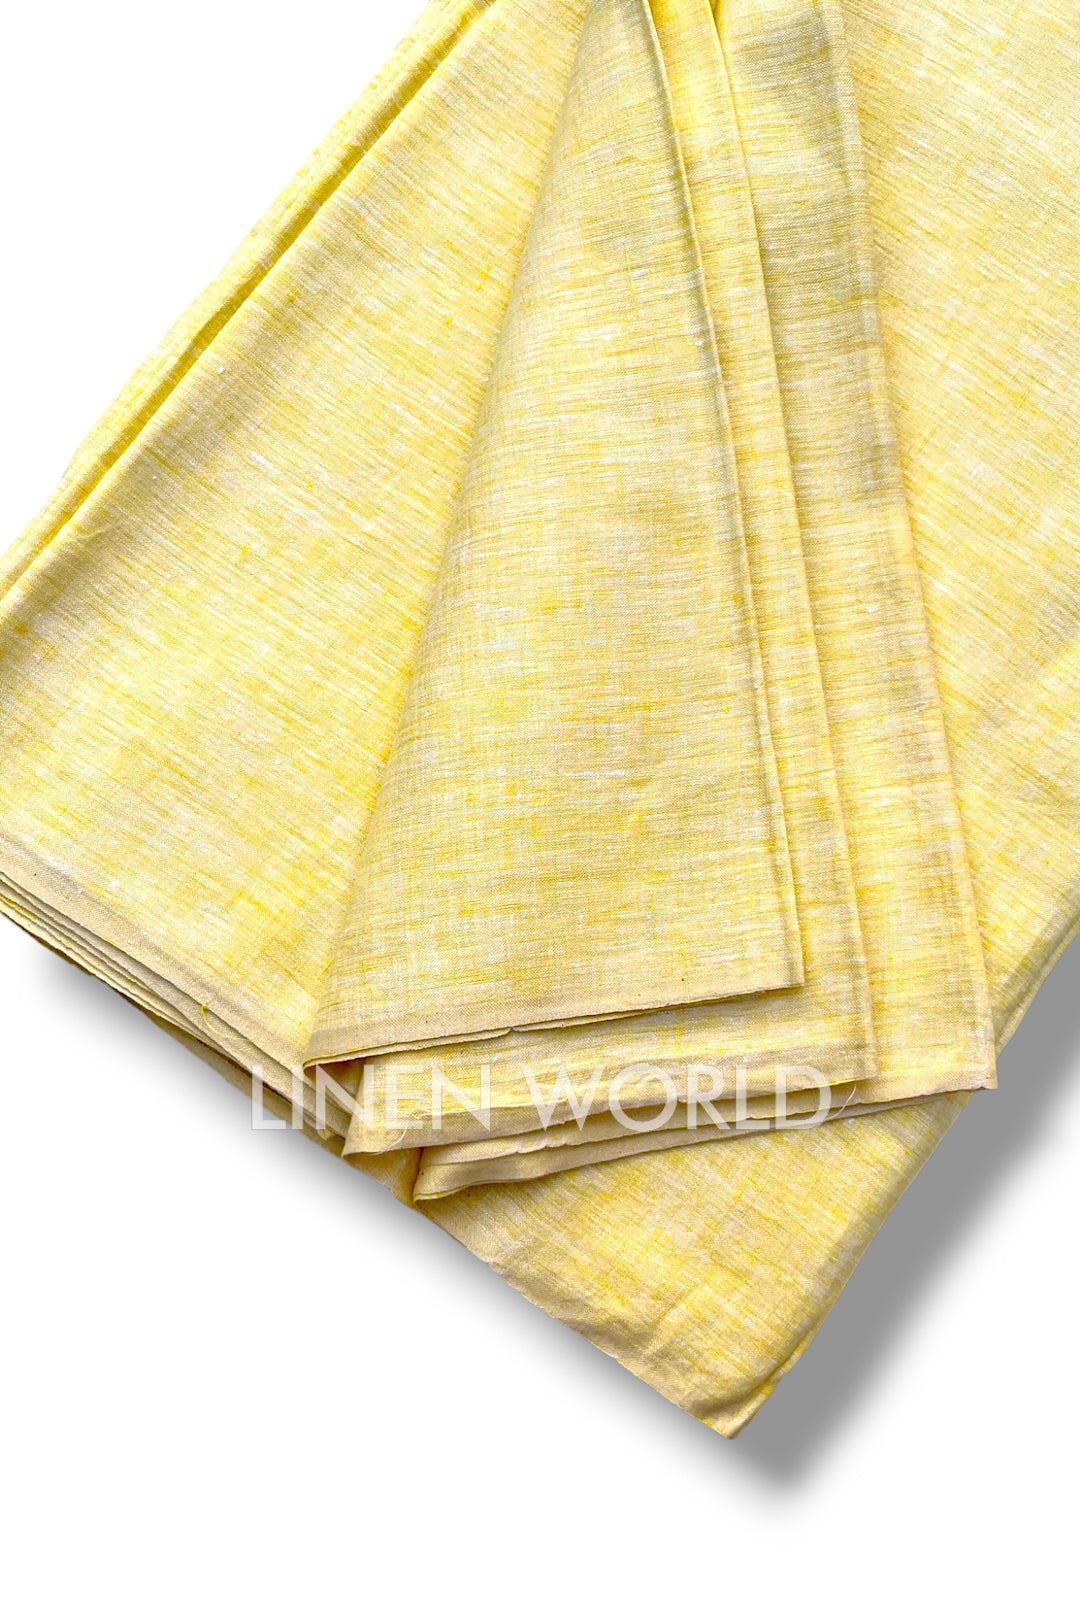 pale yellow pure linen 60 lea shirting fabric - linenworldonline.in